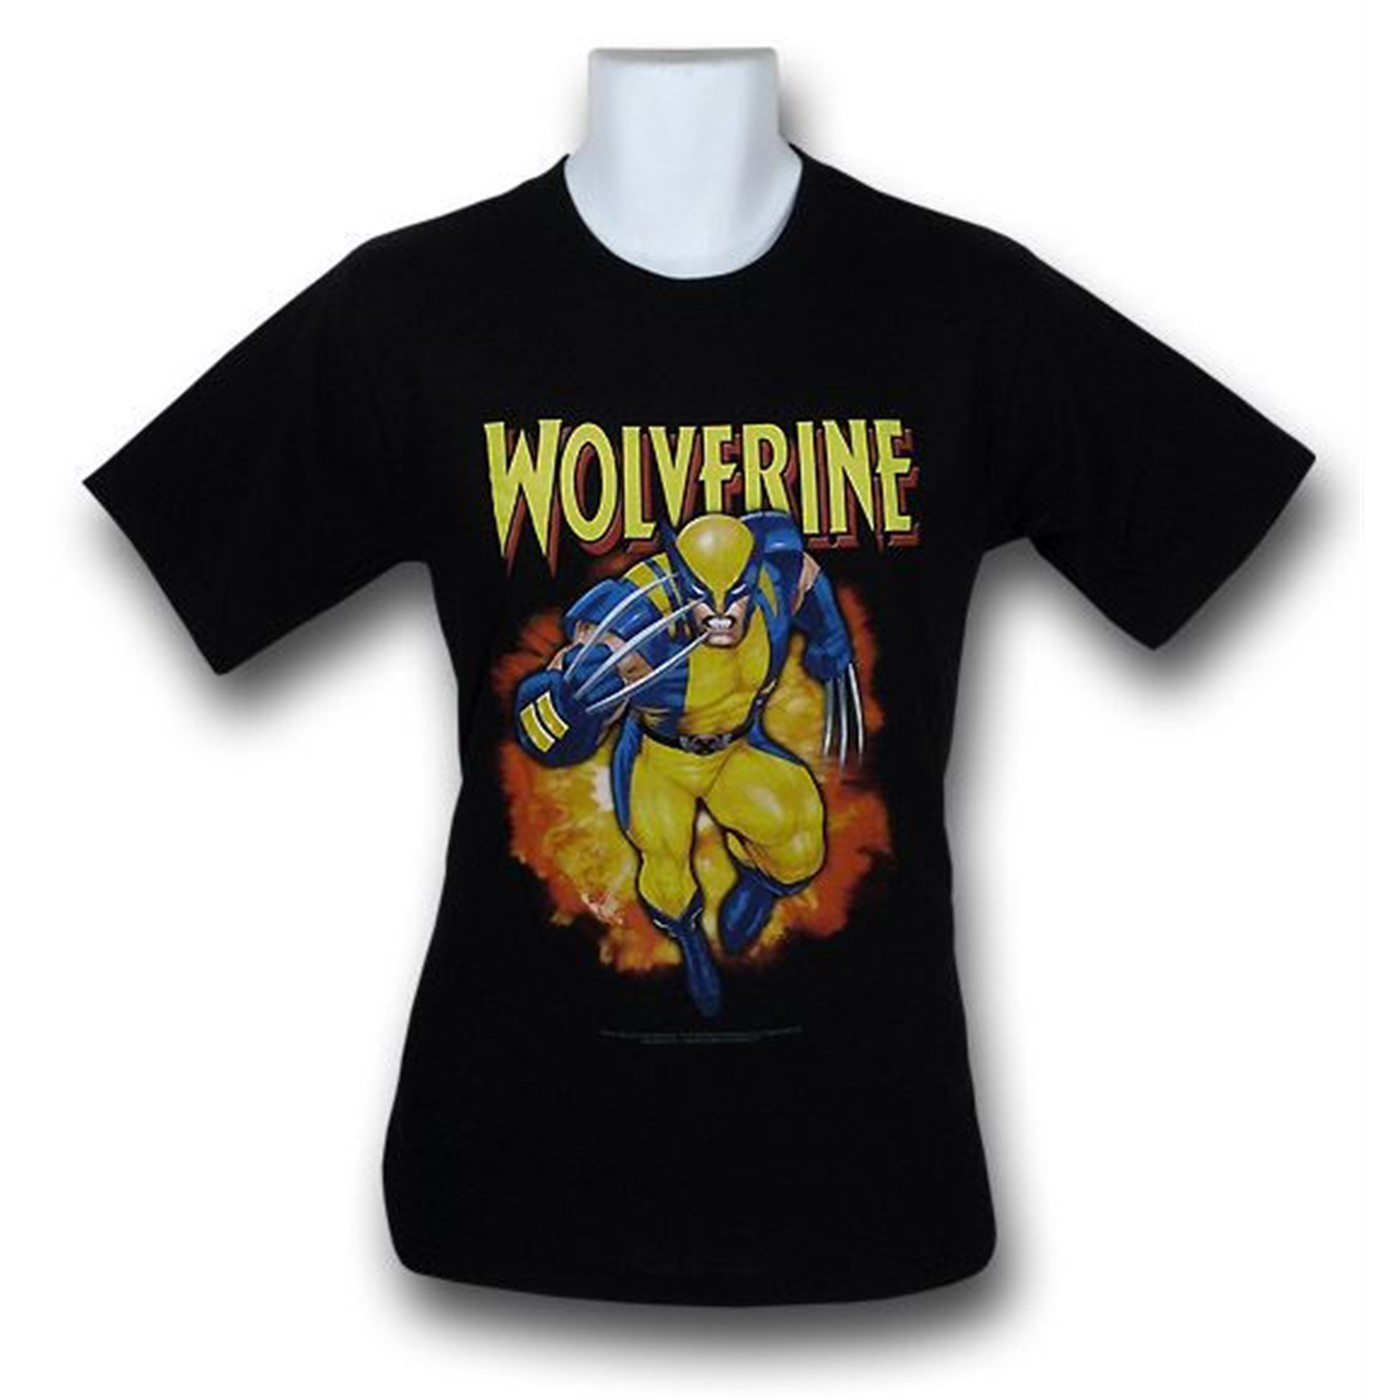 Wolverine Running On Black T-Shirt